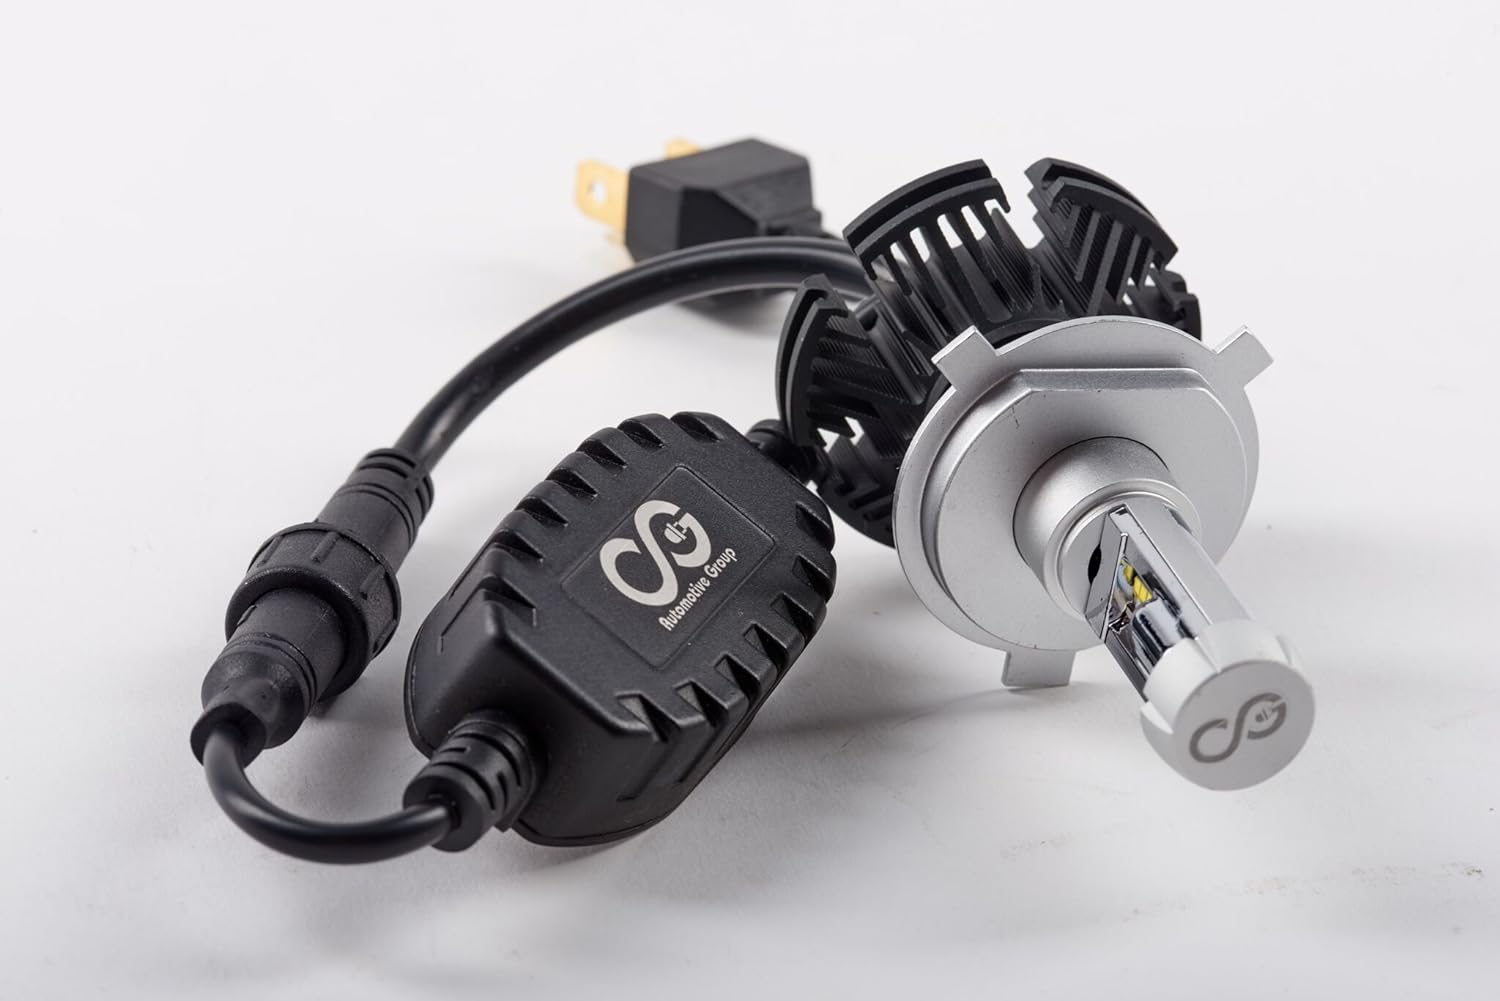 CG Automotive Workhorse H11 LED Headlight bulb- Premium Long-Lasting LED Headlight bulbs Error-Free DashTech | CANBUS+DRL | Improved Road Visibility & Safety | Exceptional Brightness | 2 Yr Warranty